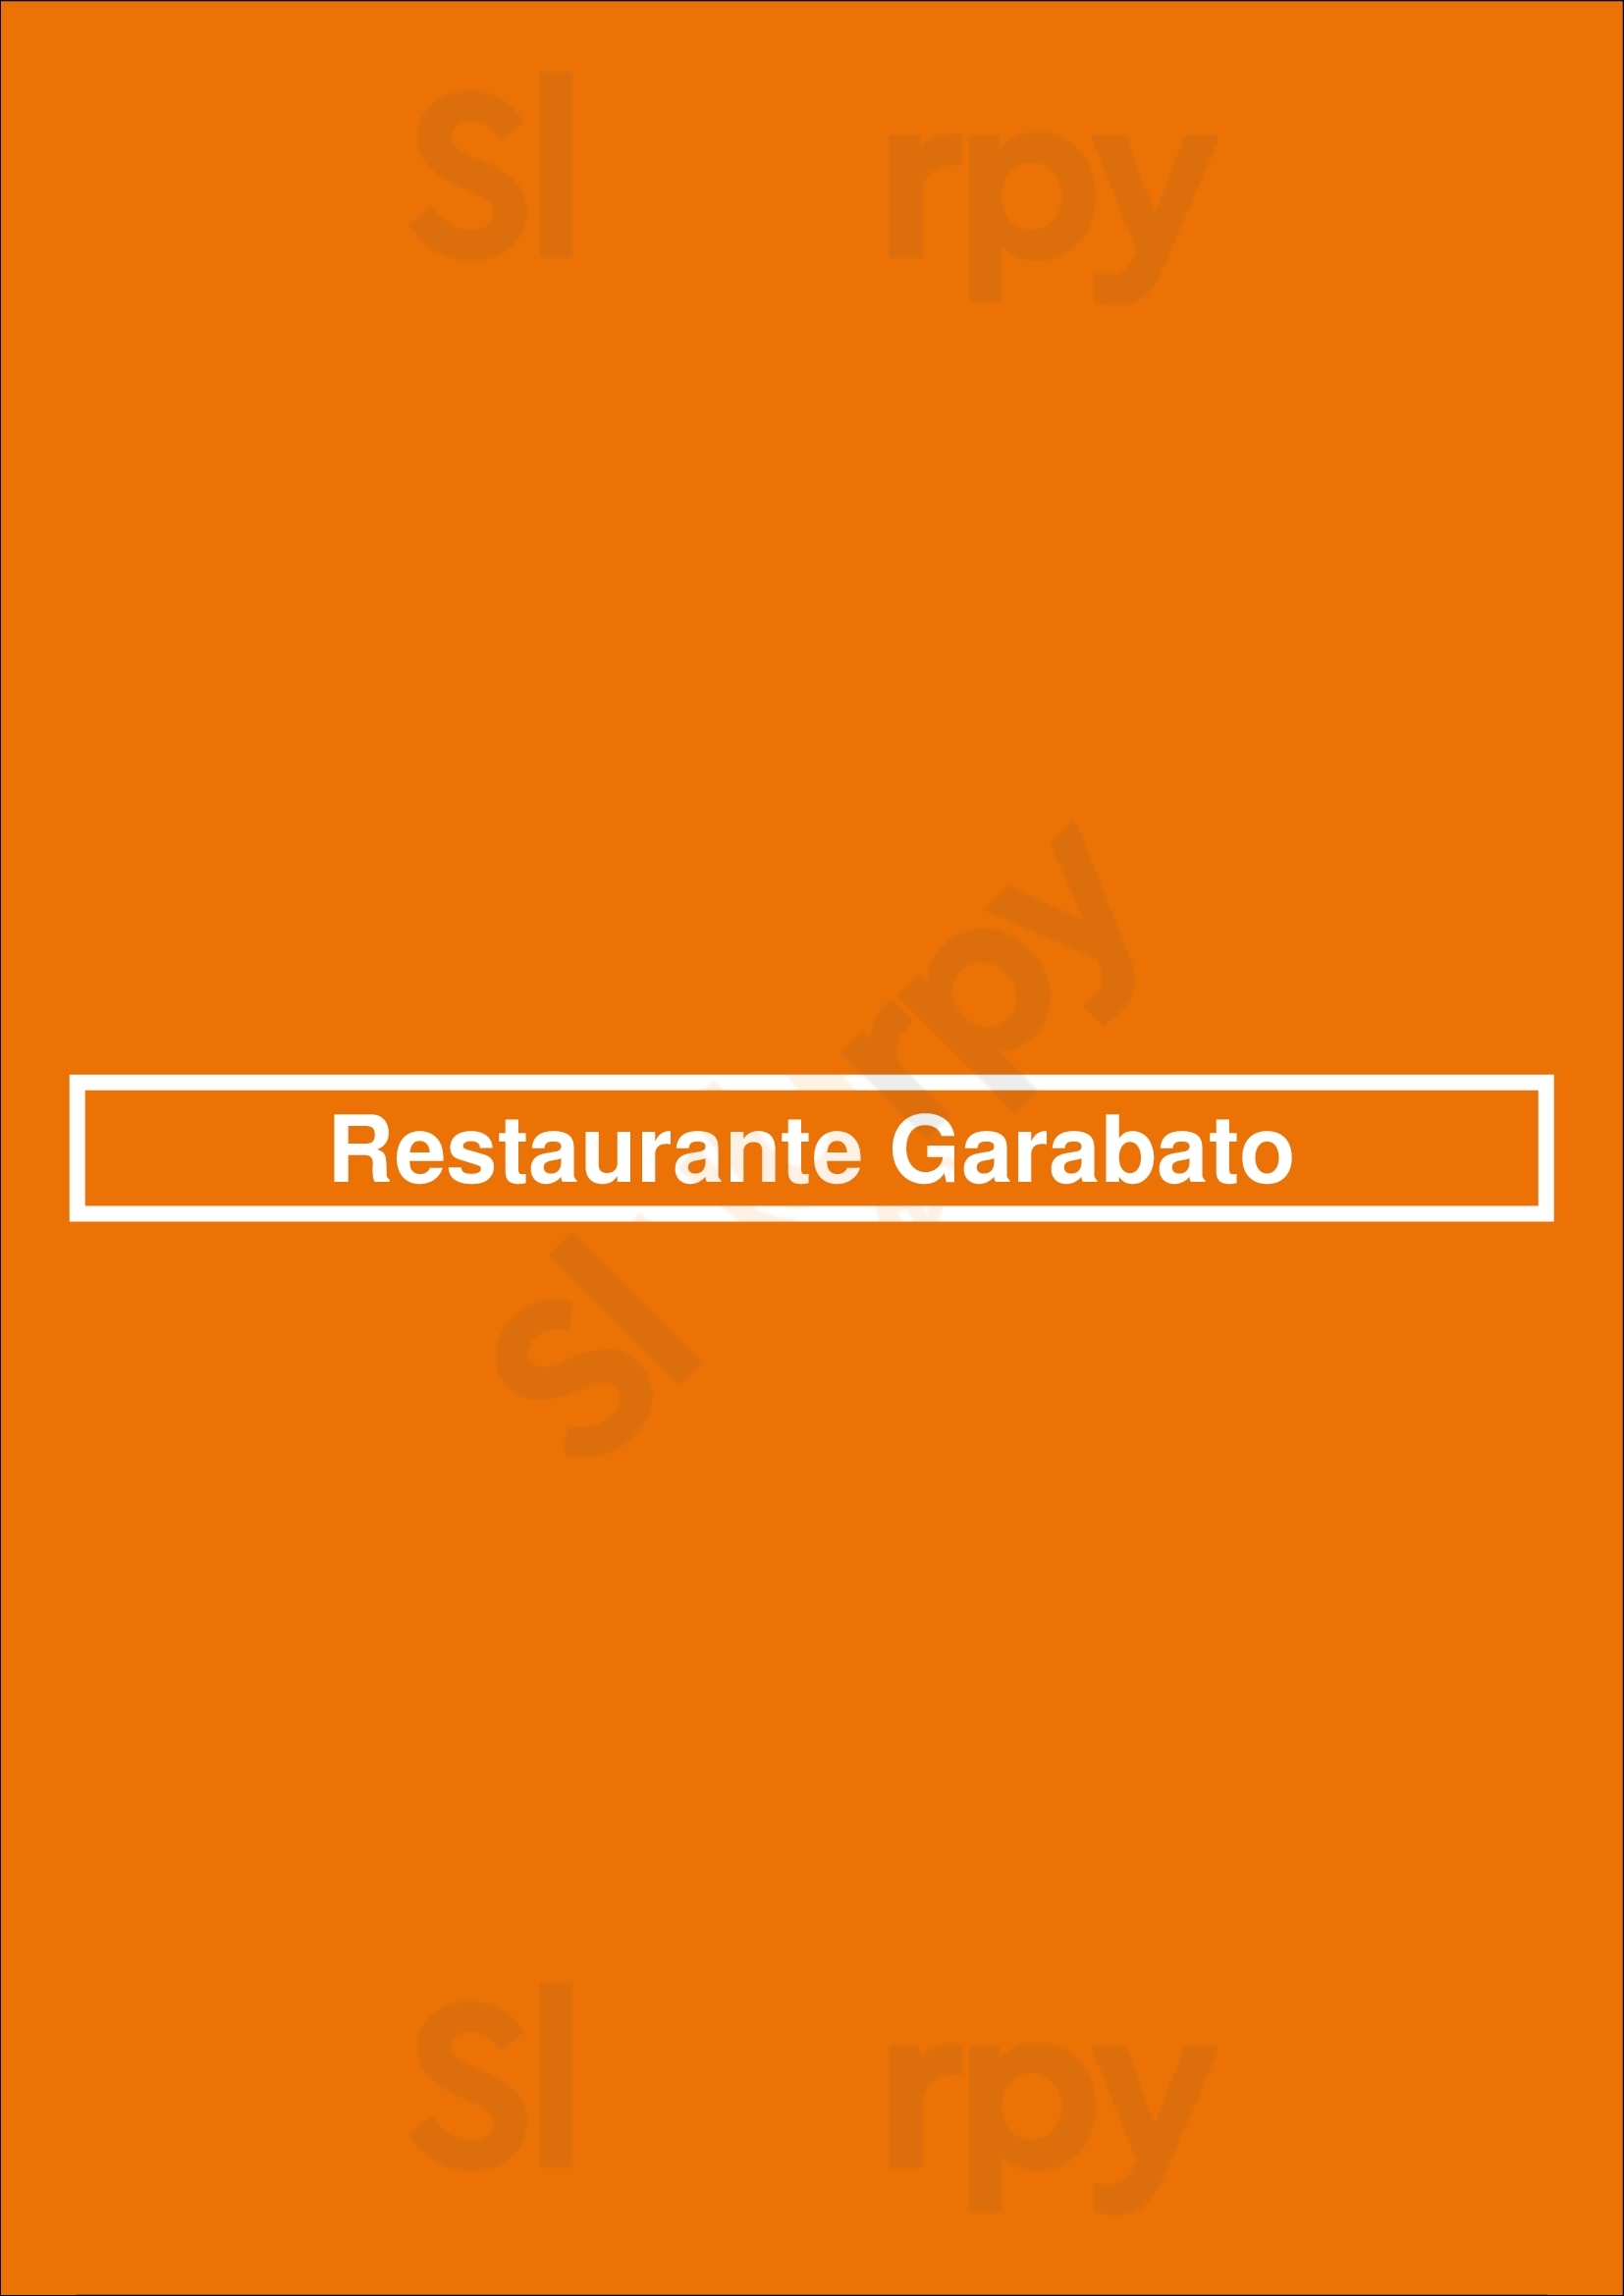 Restaurante Garabato Albacete Menu - 1